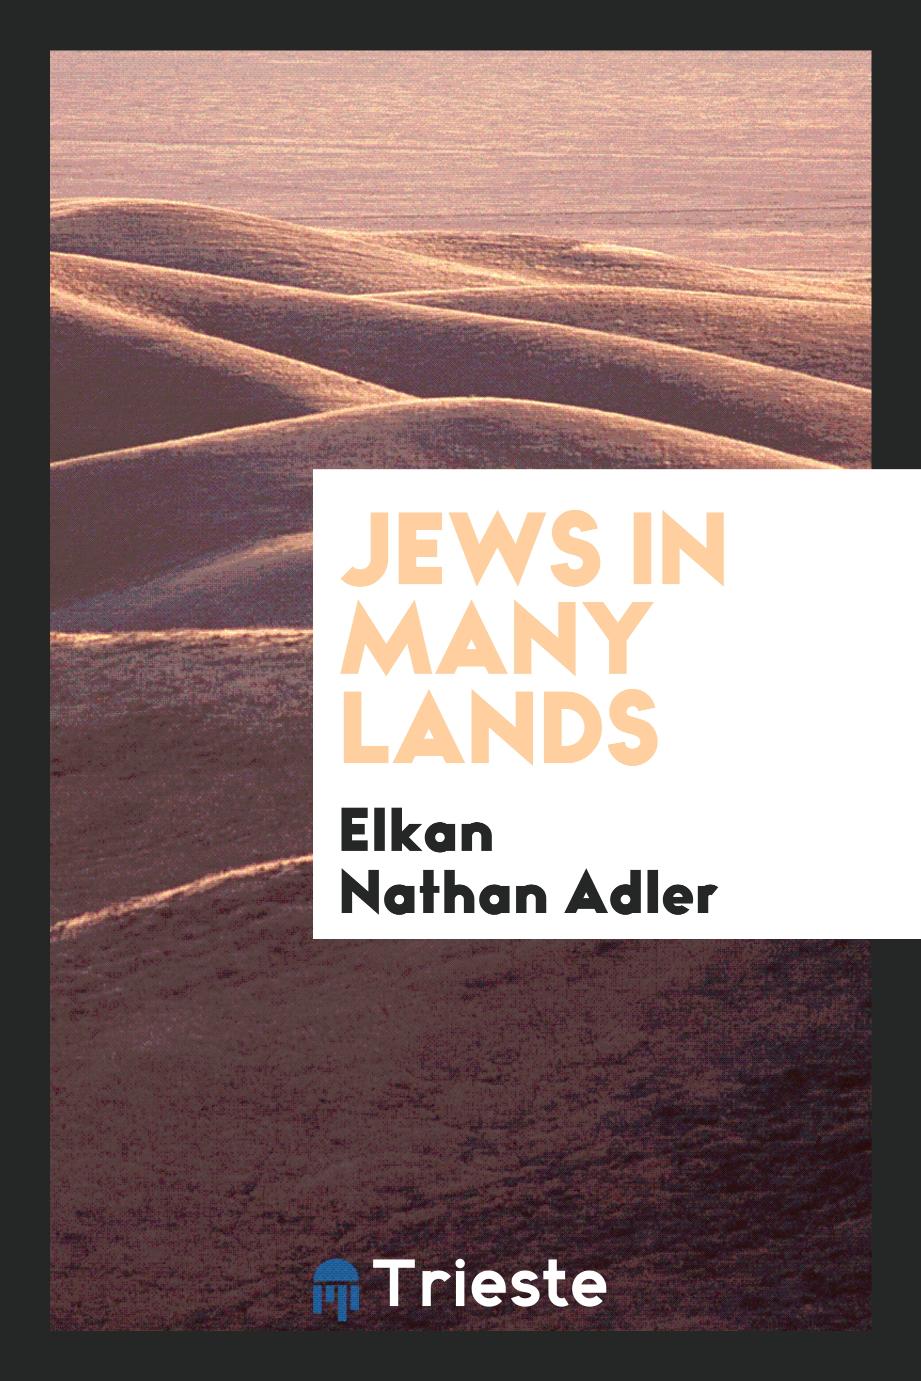 Jews in many lands